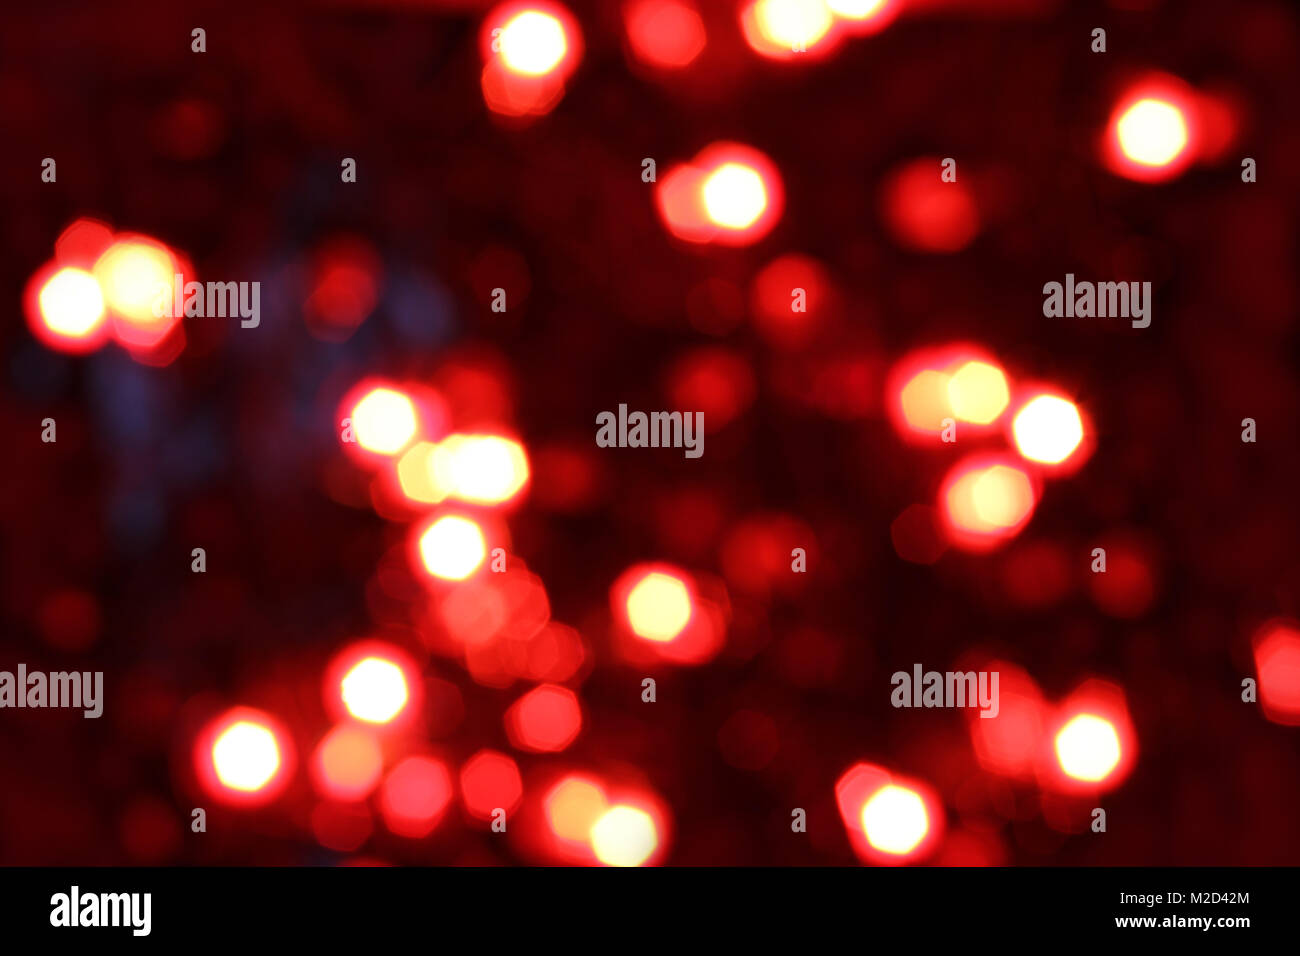 Fondo de luces rojas fotografías e imágenes de alta resolución - Alamy